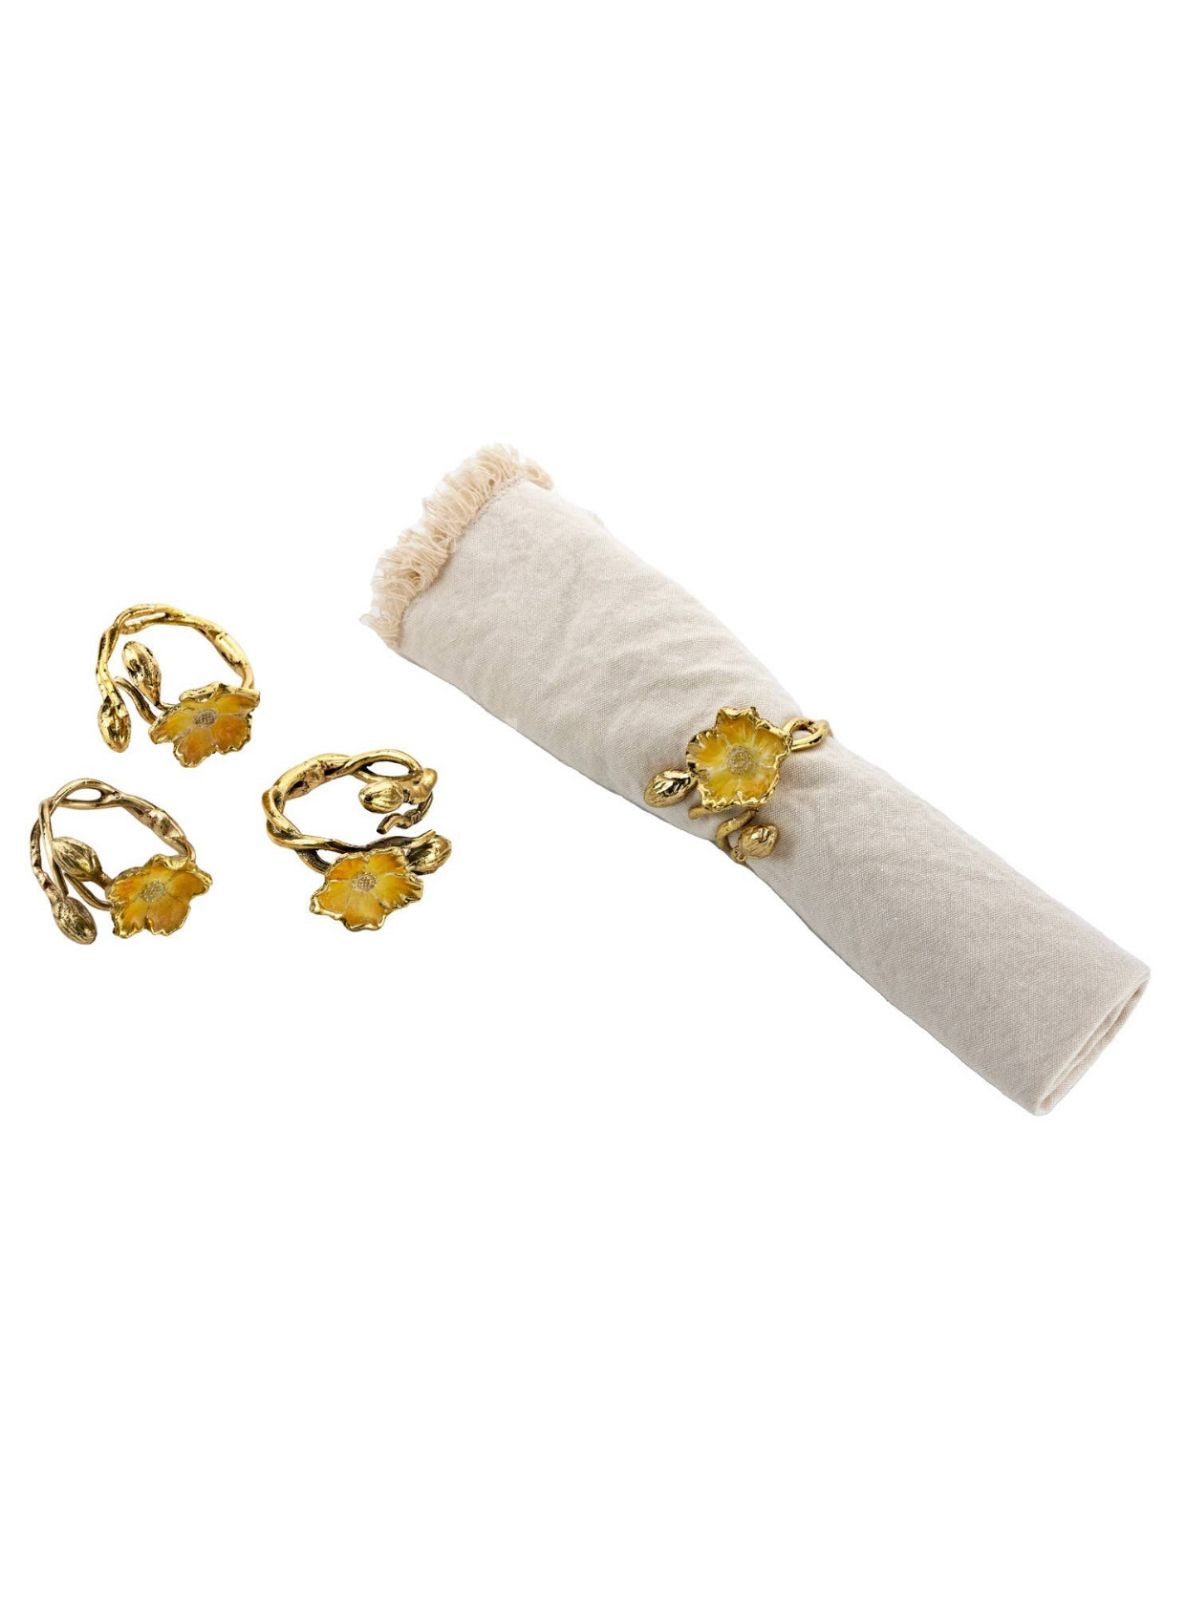 Set of 5 Gold Metallic Round Napkin Rings with Luxury Flower Design. 